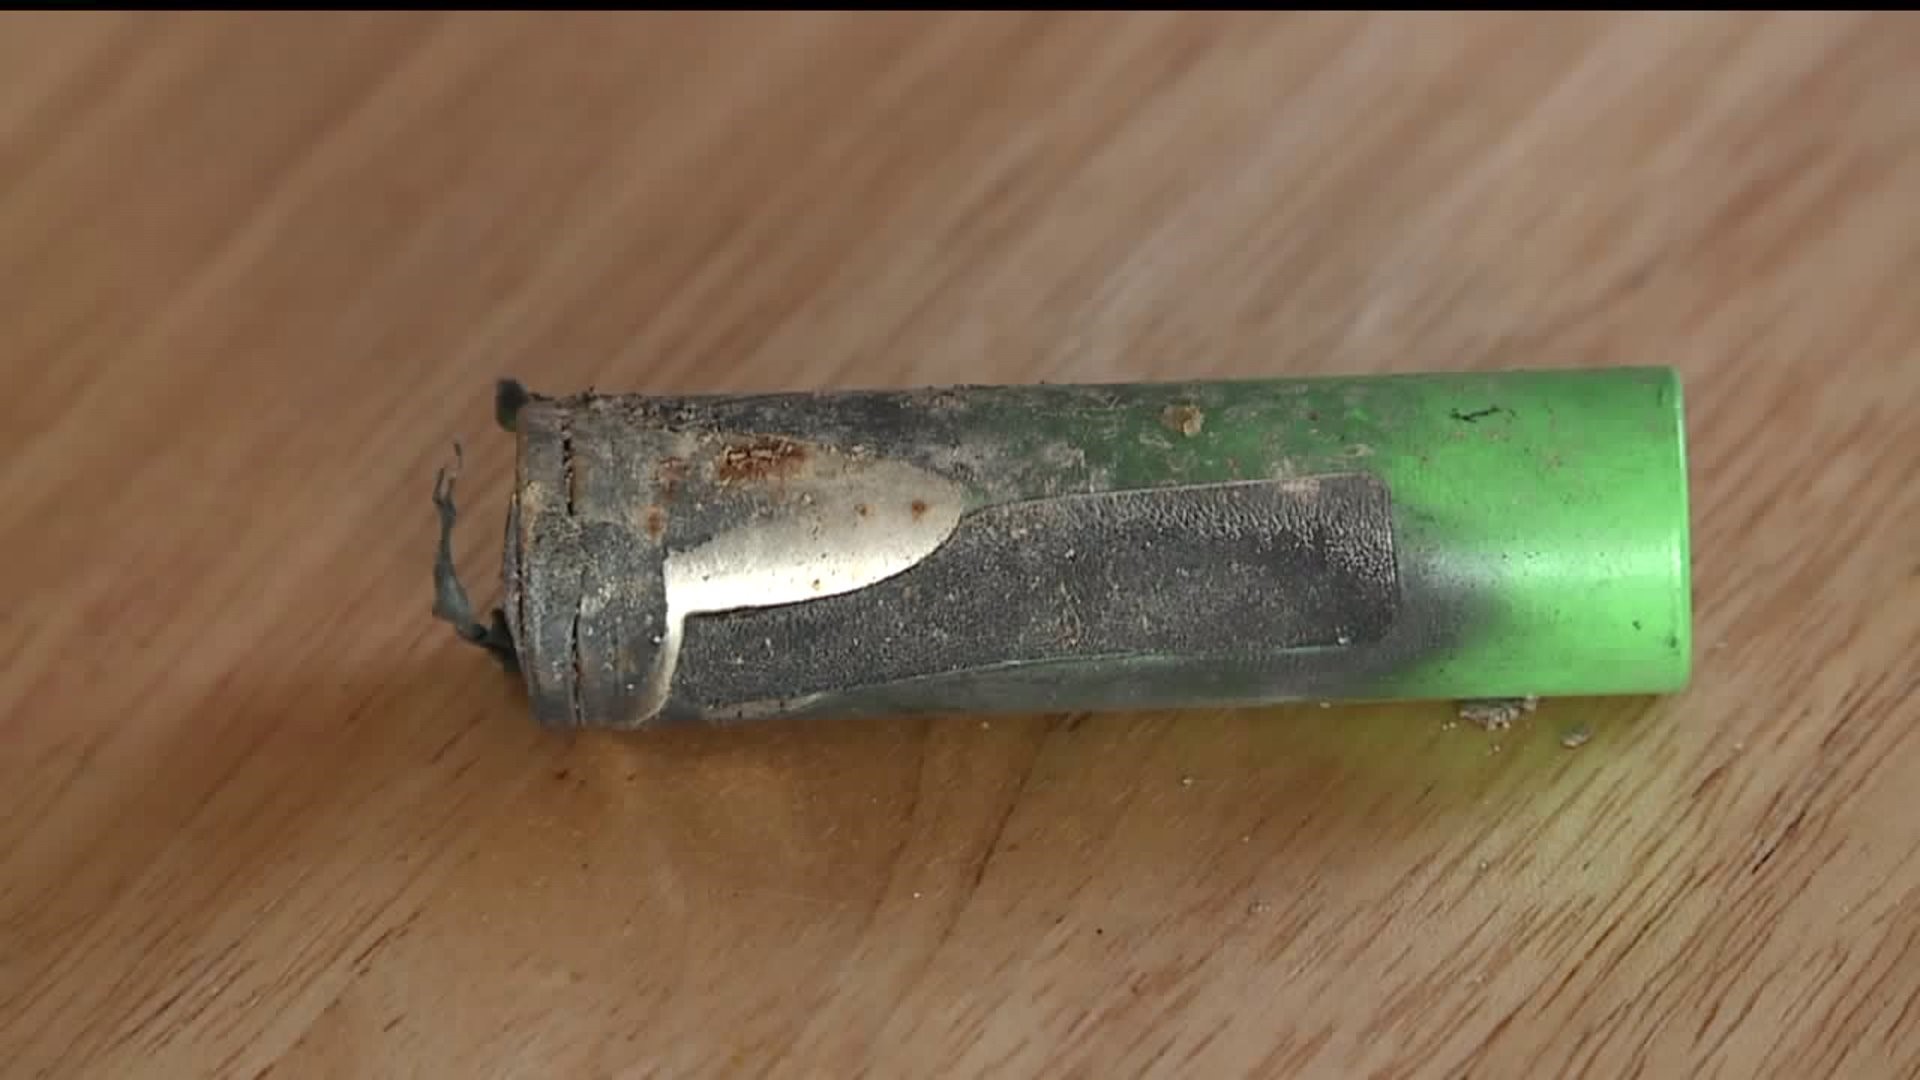 Vape pens explosions raising safety concerns